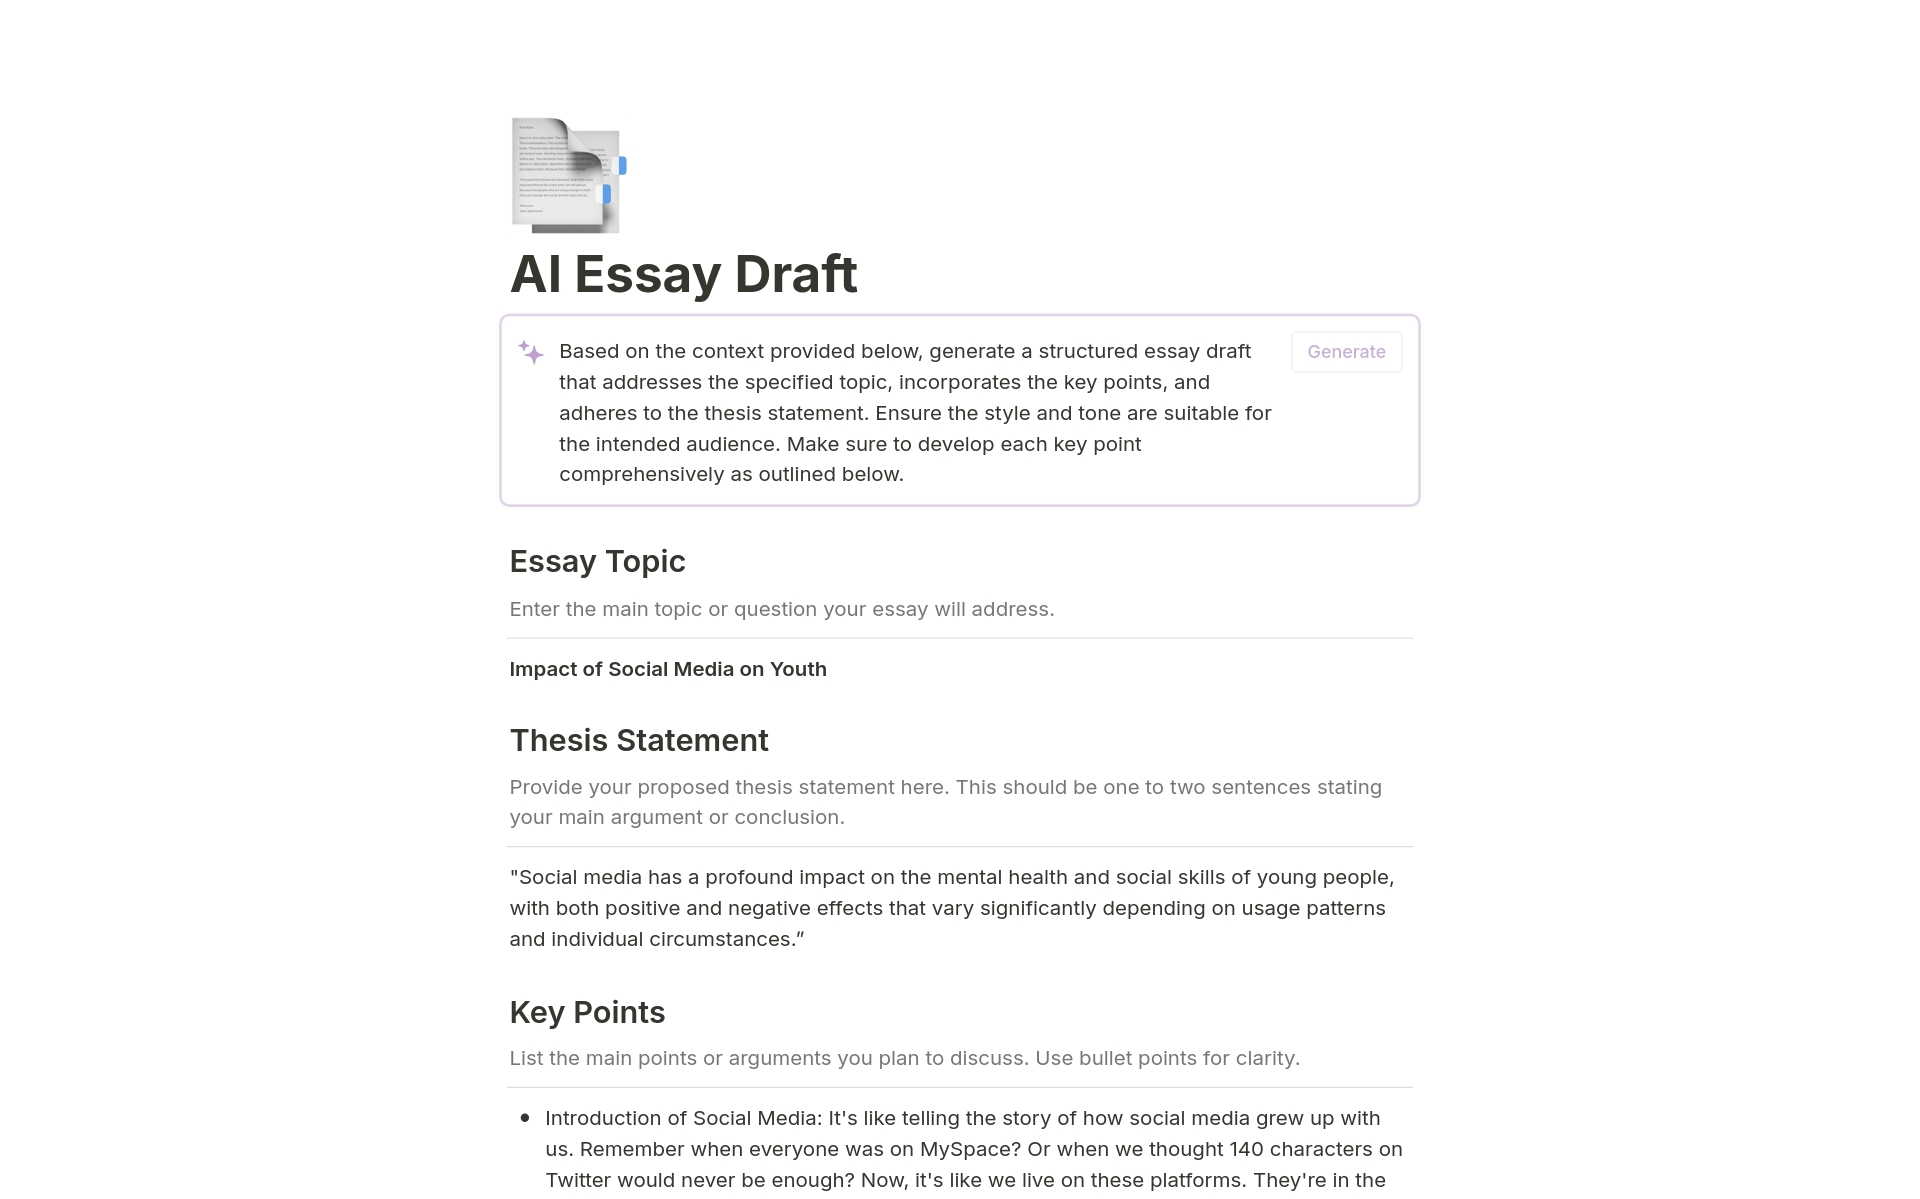 Vista previa de plantilla para AI Essay Draft